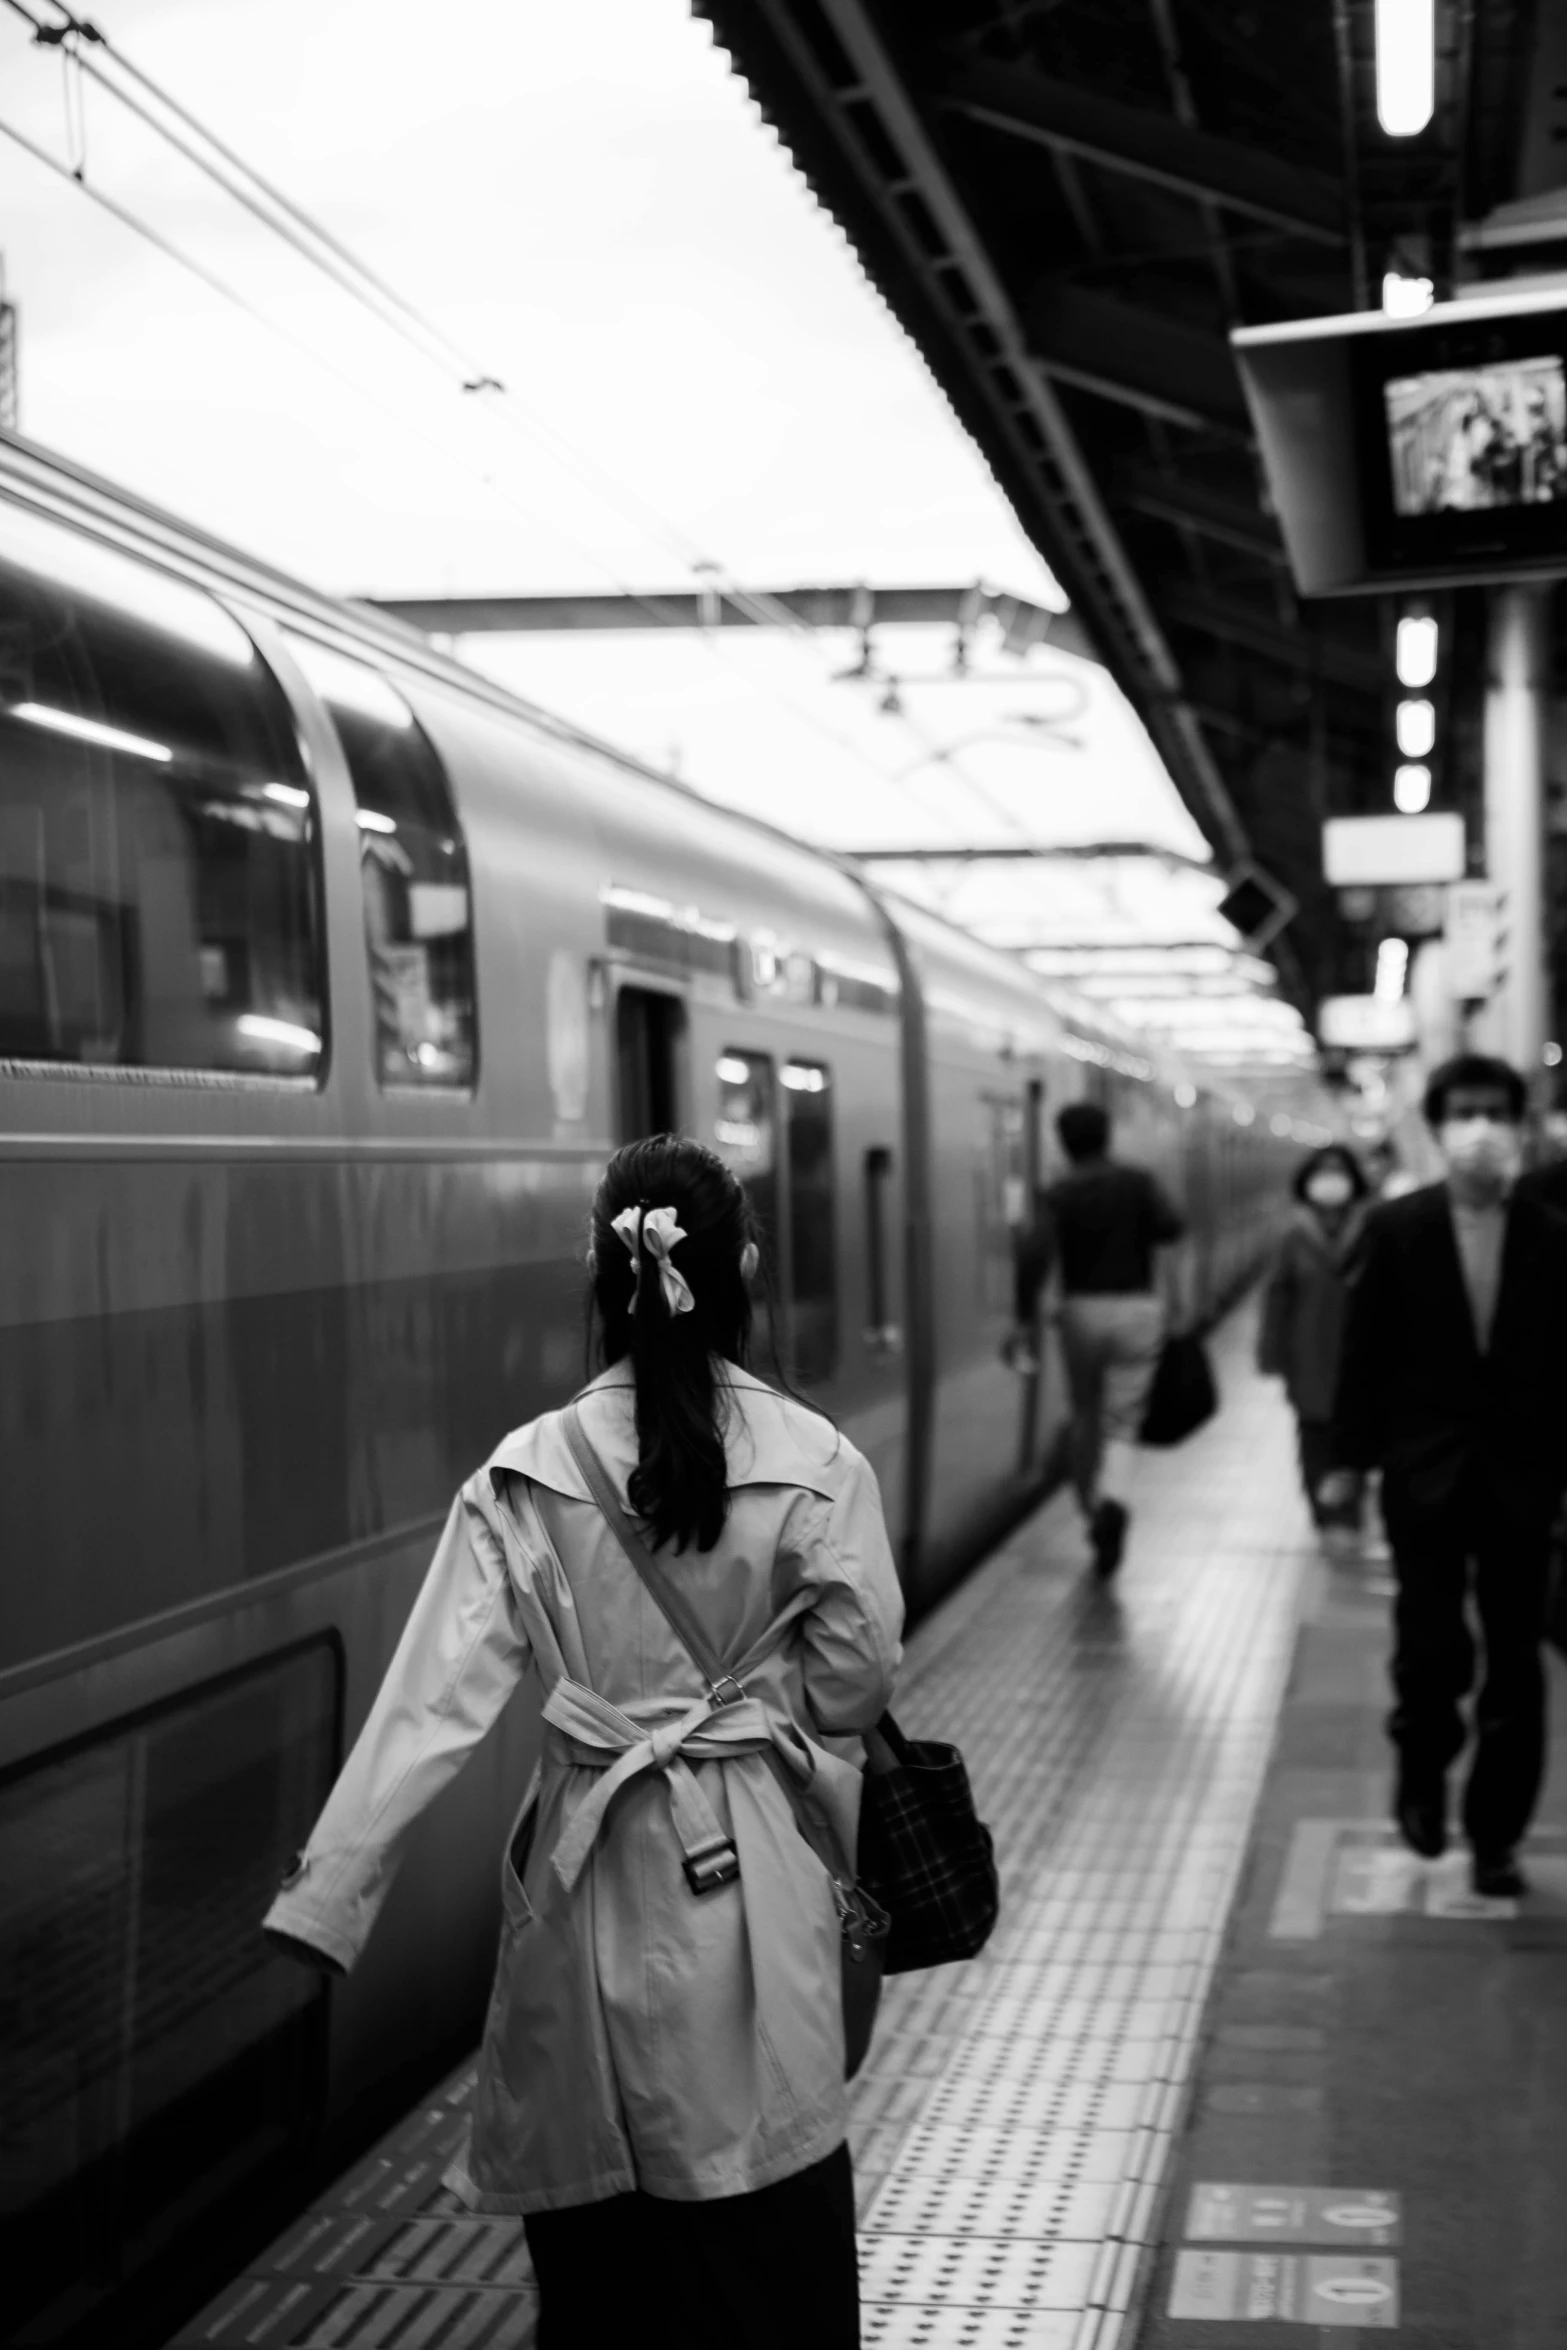 a woman walking towards a train on the platform